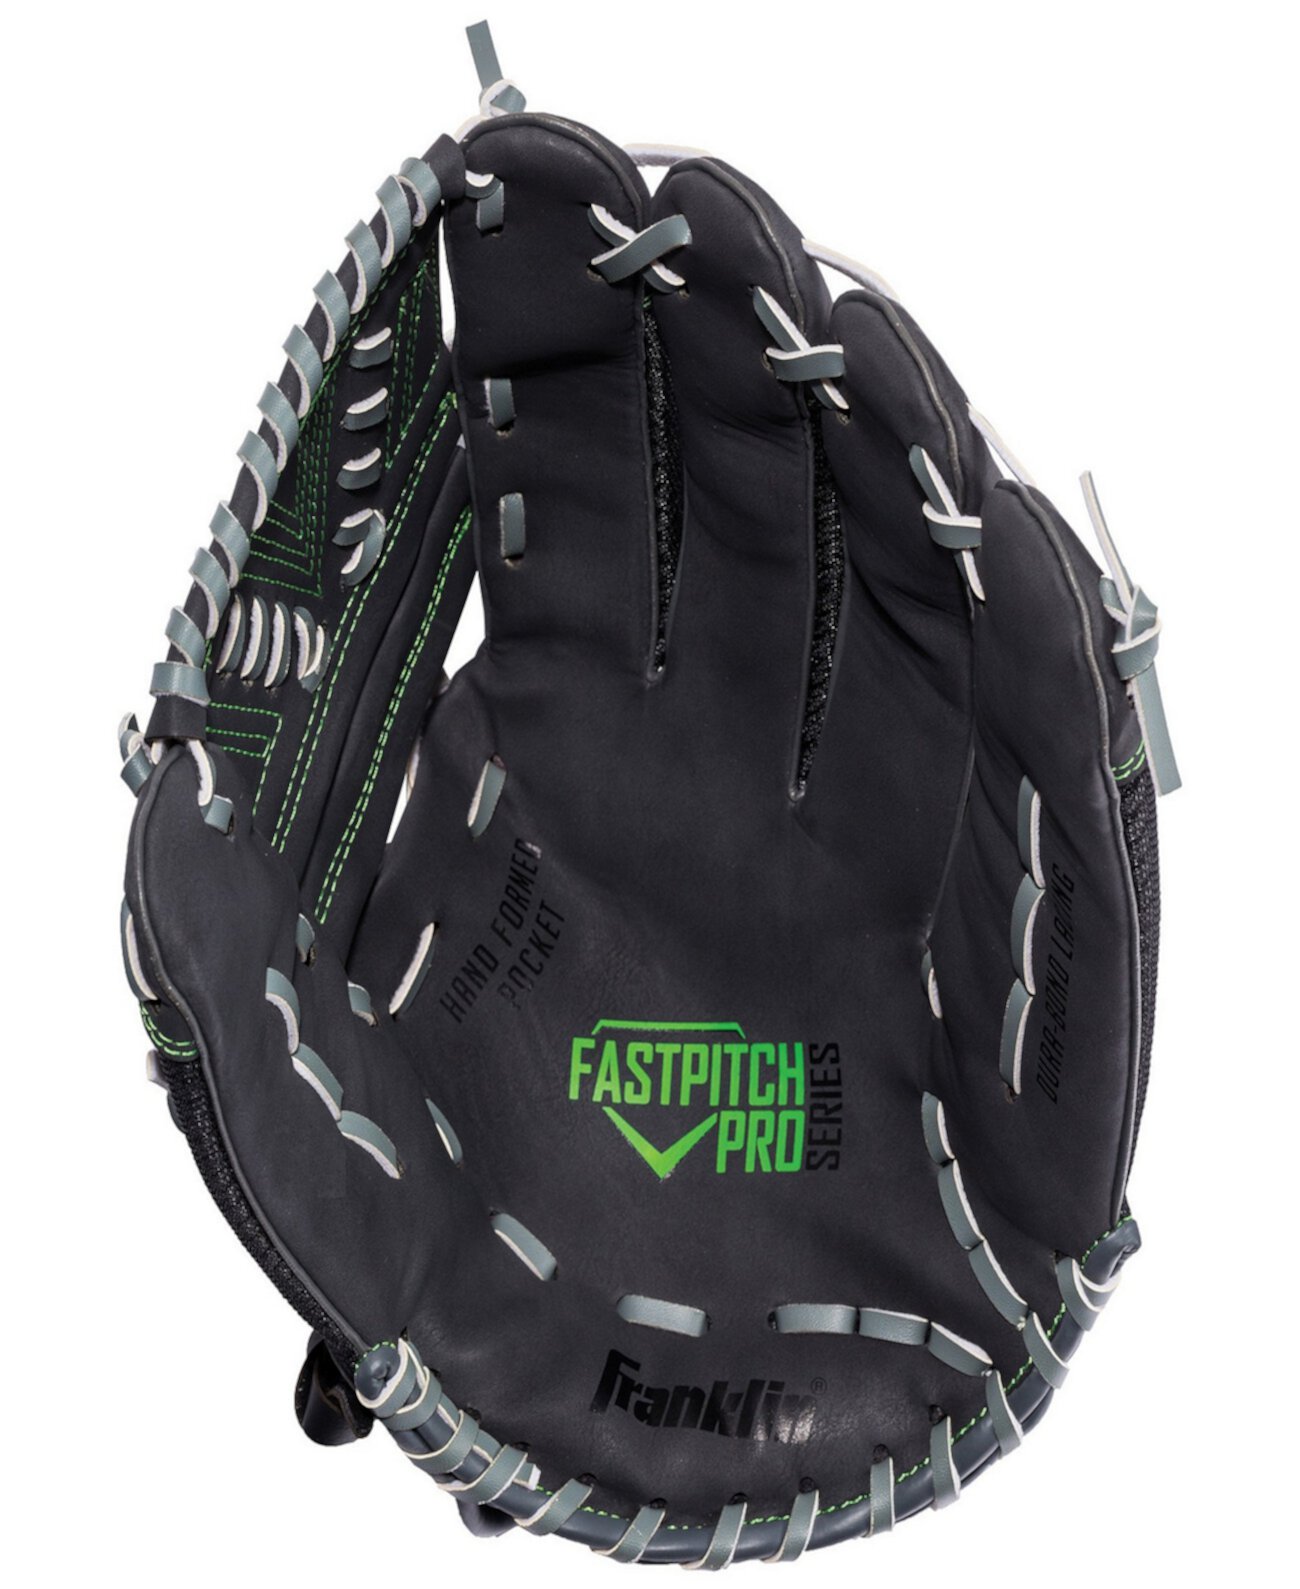 11-дюймовая перчатка для софтбола Fastpitch Pro для левой руки Franklin Sports